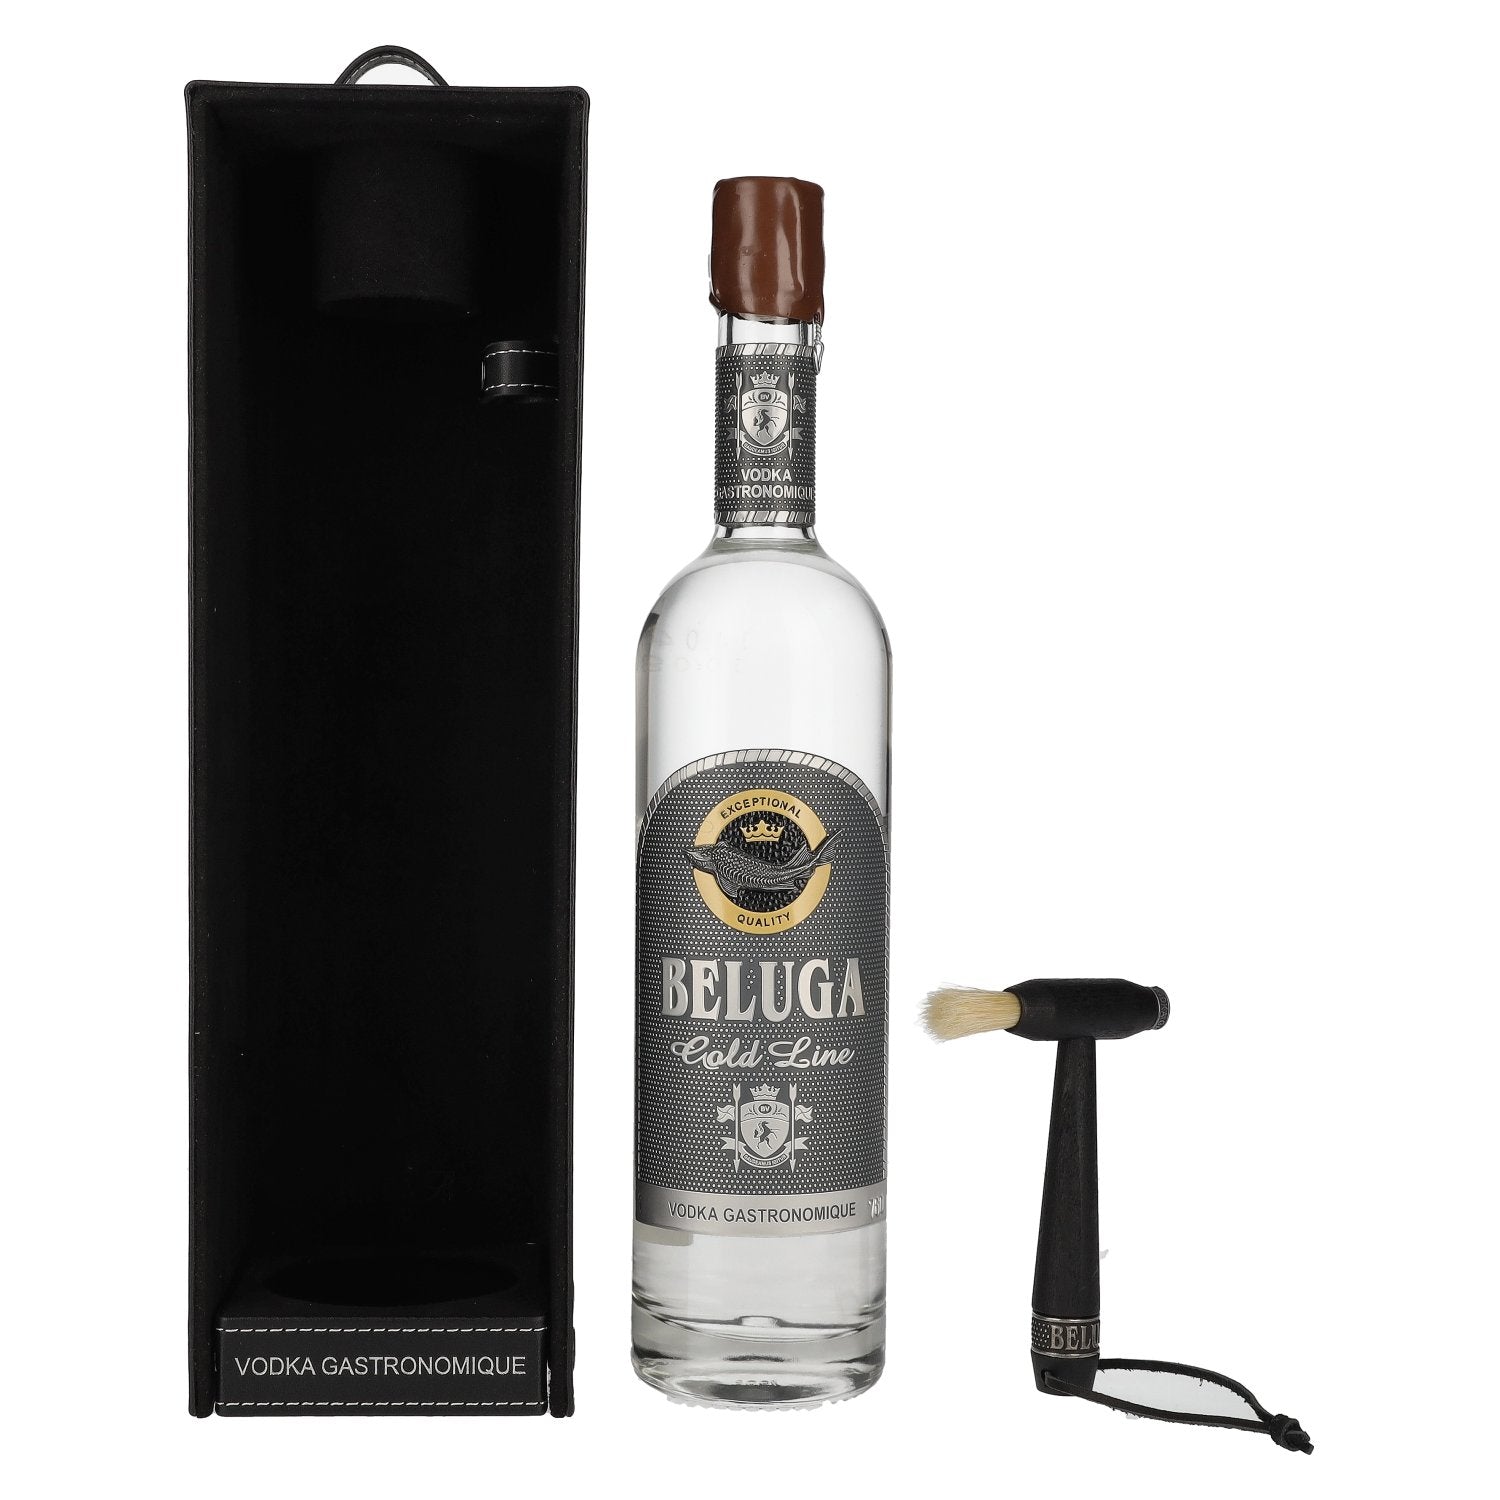 Beluga Gold Line Vodka Montenegro 40% Vol. 0,7l in Giftbox in Lederoptik with Pinsel